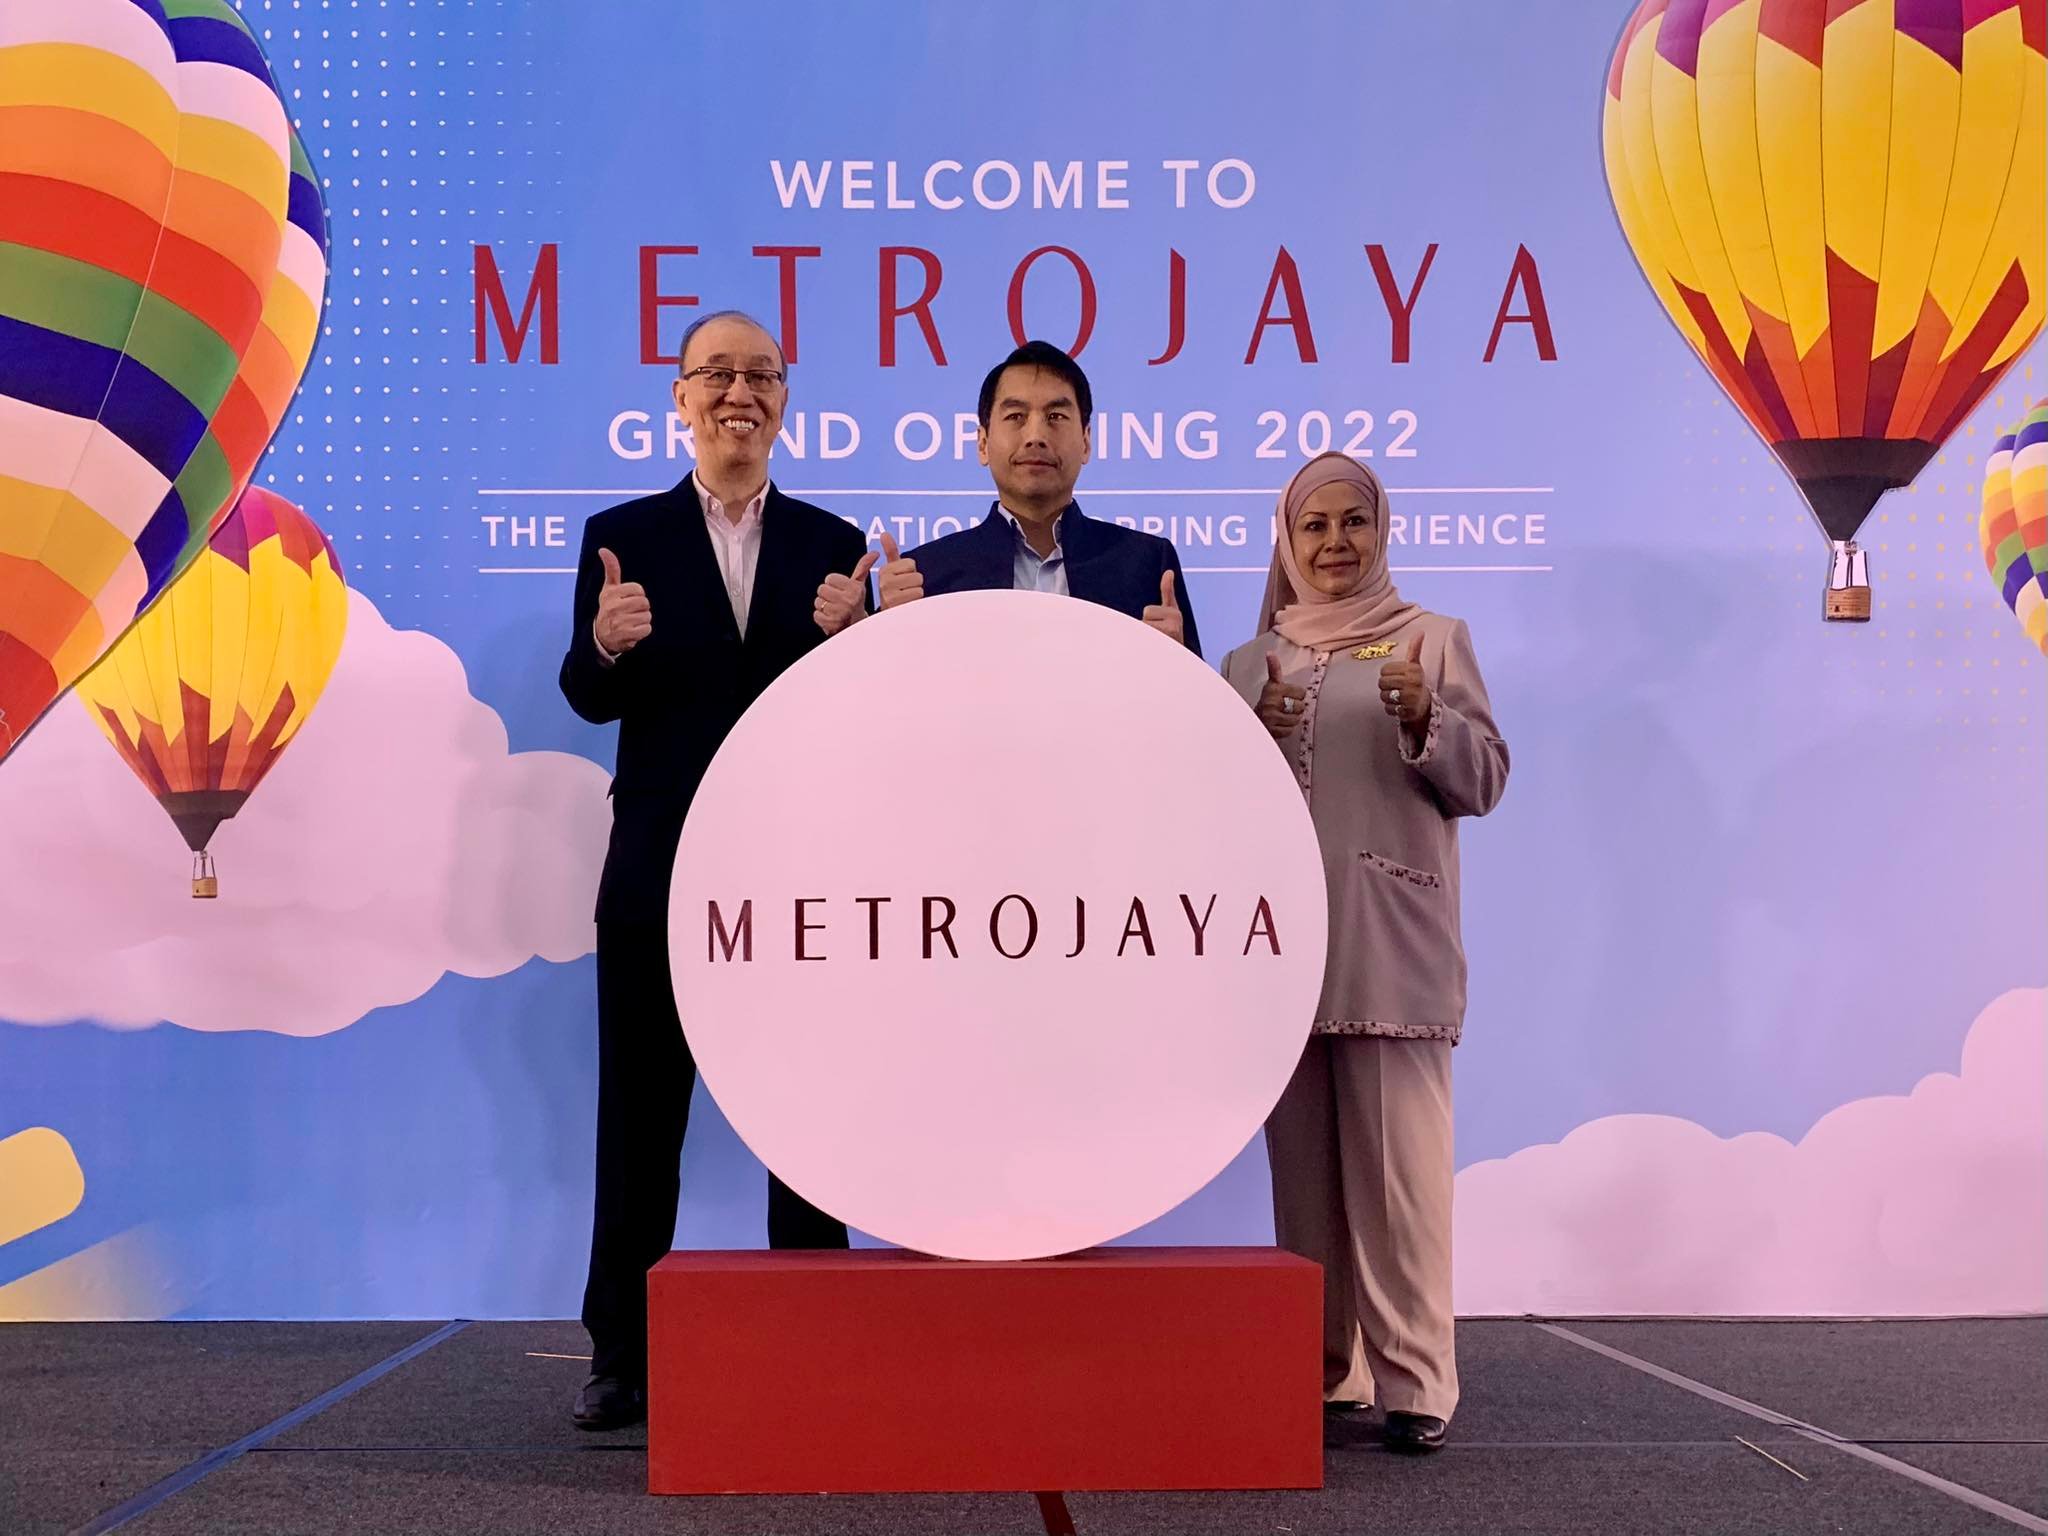 Metrojaya LaLaport Bukit Bintang